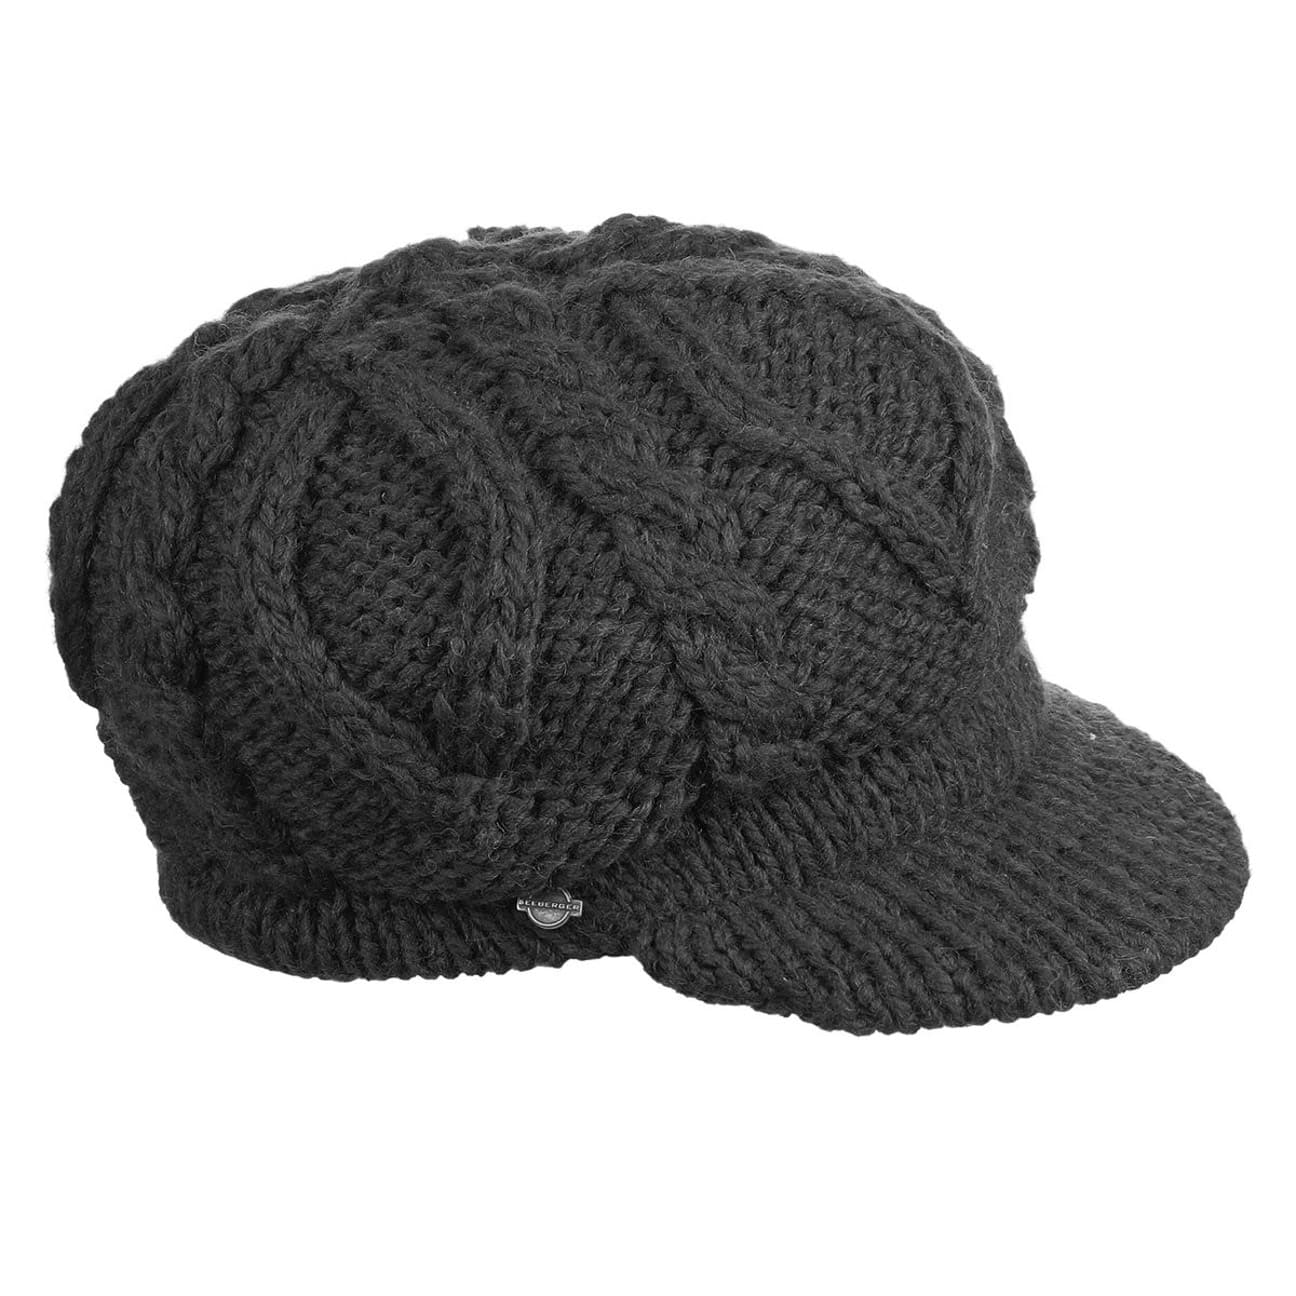 Liberica Knit Baker Boy Hat by Seeberger, EUR 25,95 --> Hats, caps ...